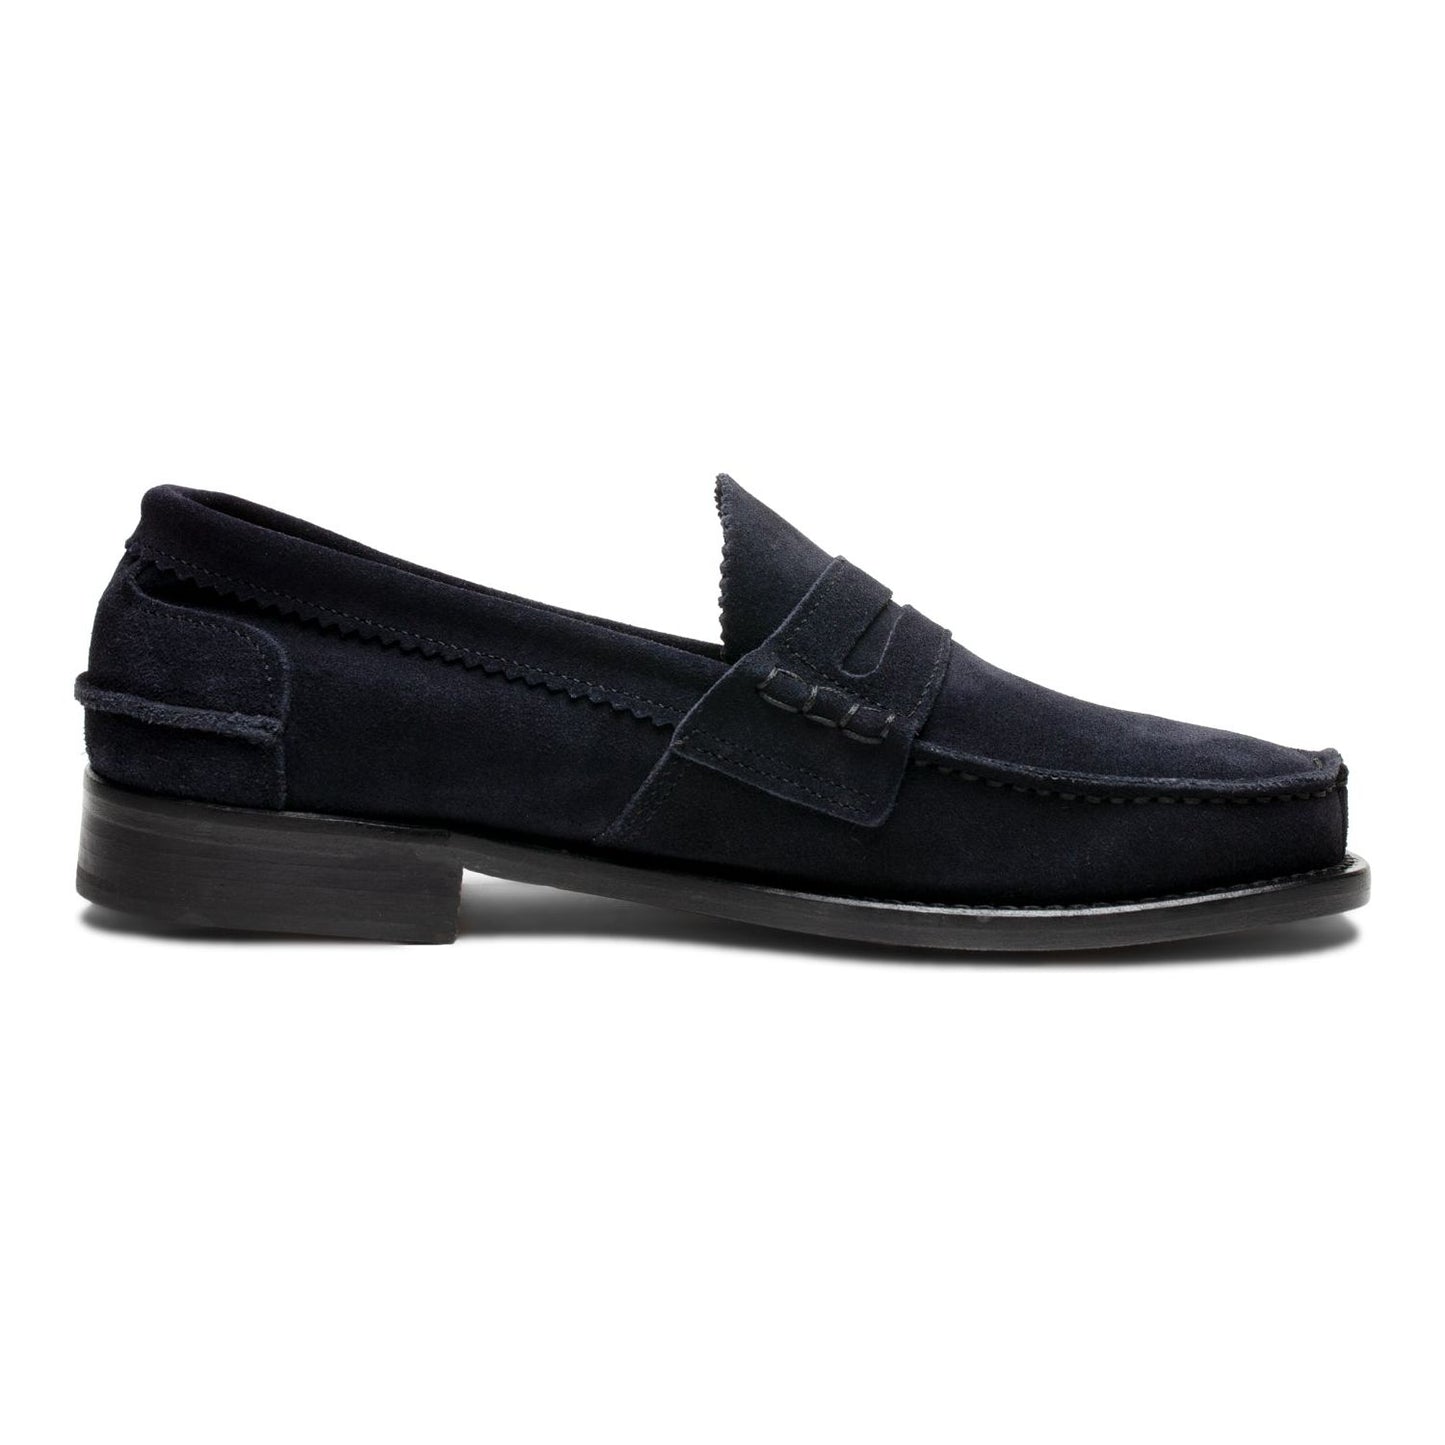 Saxone of Scotland Elegant Suede Leather Loafers for Men dark-blue-suede-leather-mens-loafers-shoes SATAINN-N1000-CAMOSCIO-BLU-1-87b0d64d-1c5.jpg